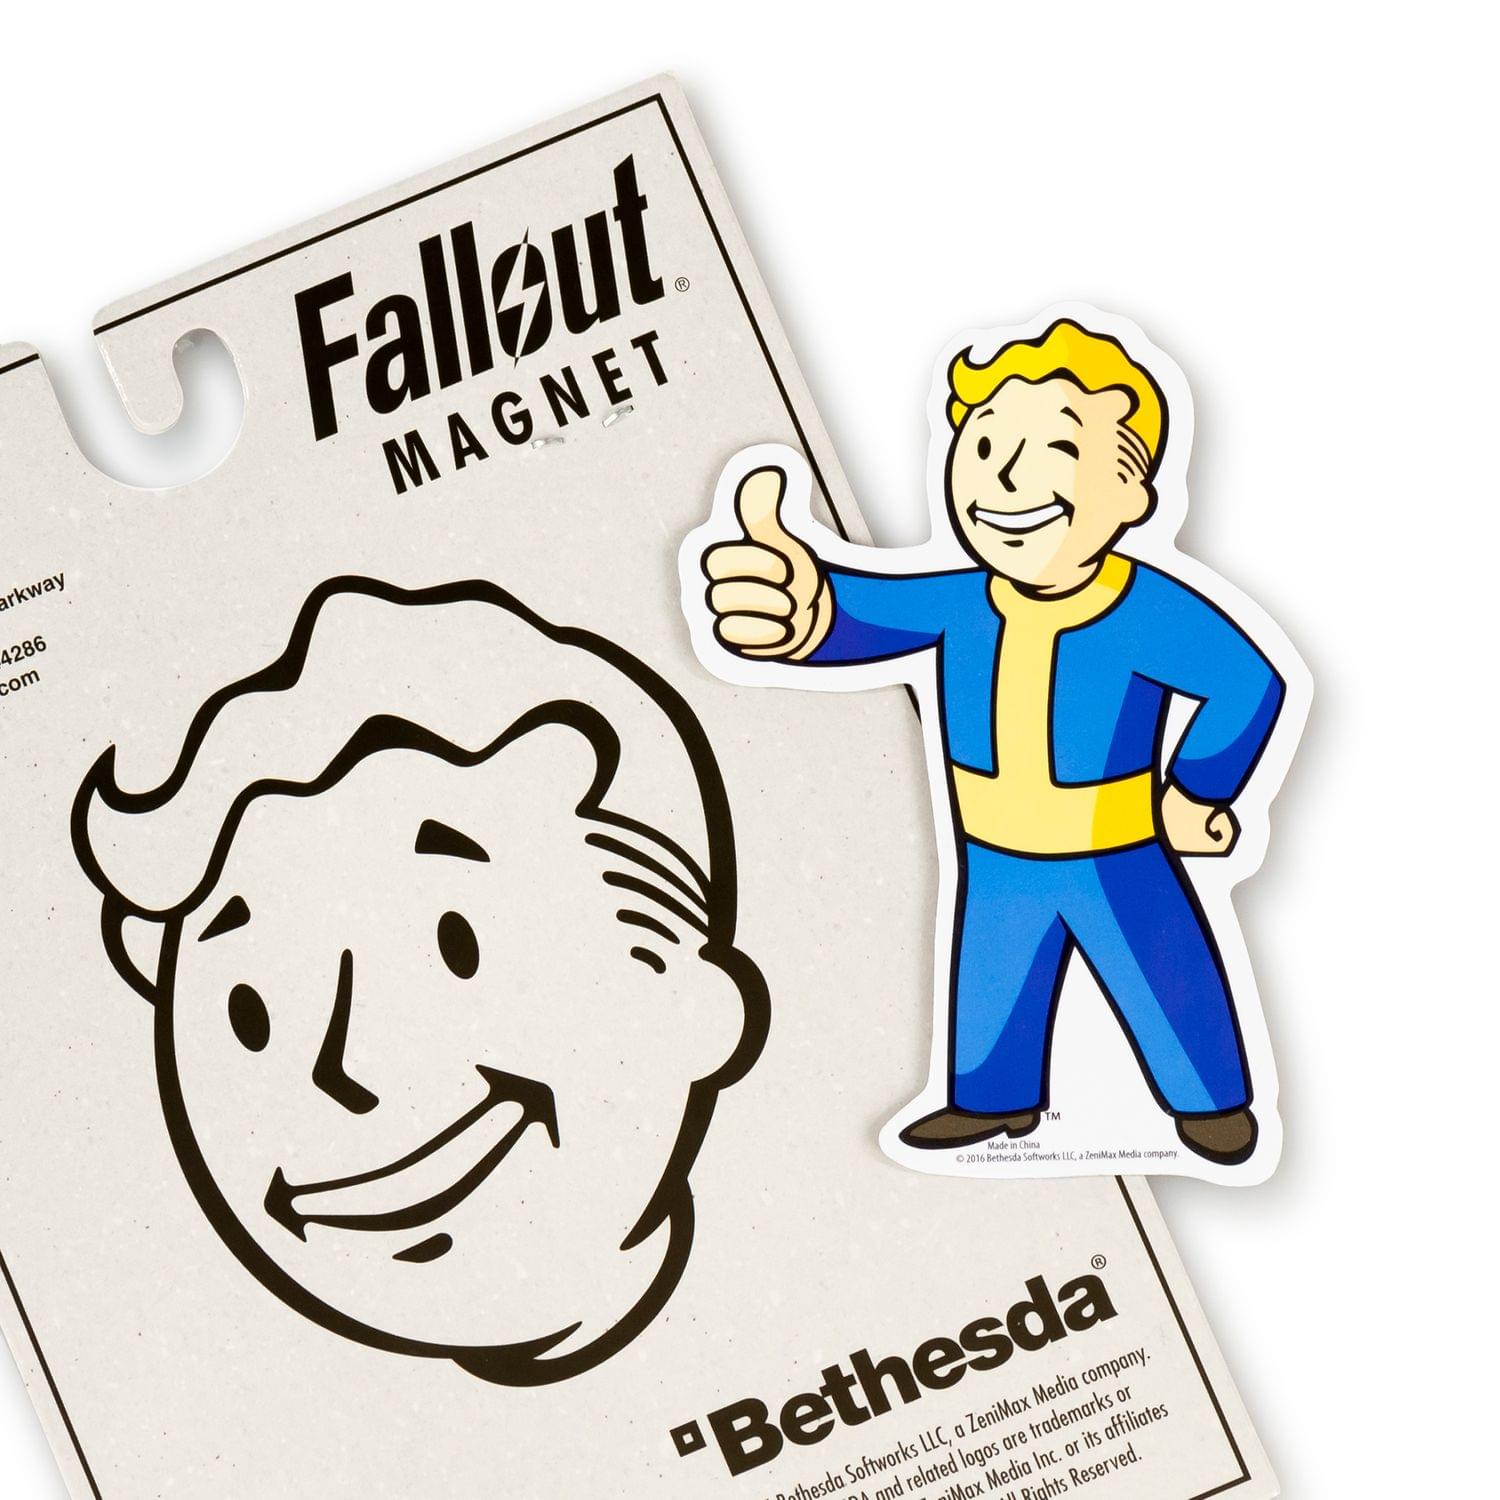 Fallout Merchandise |  Fridge Magnet of Fallout Vault Boy Magnet Sticker | 4 Inches